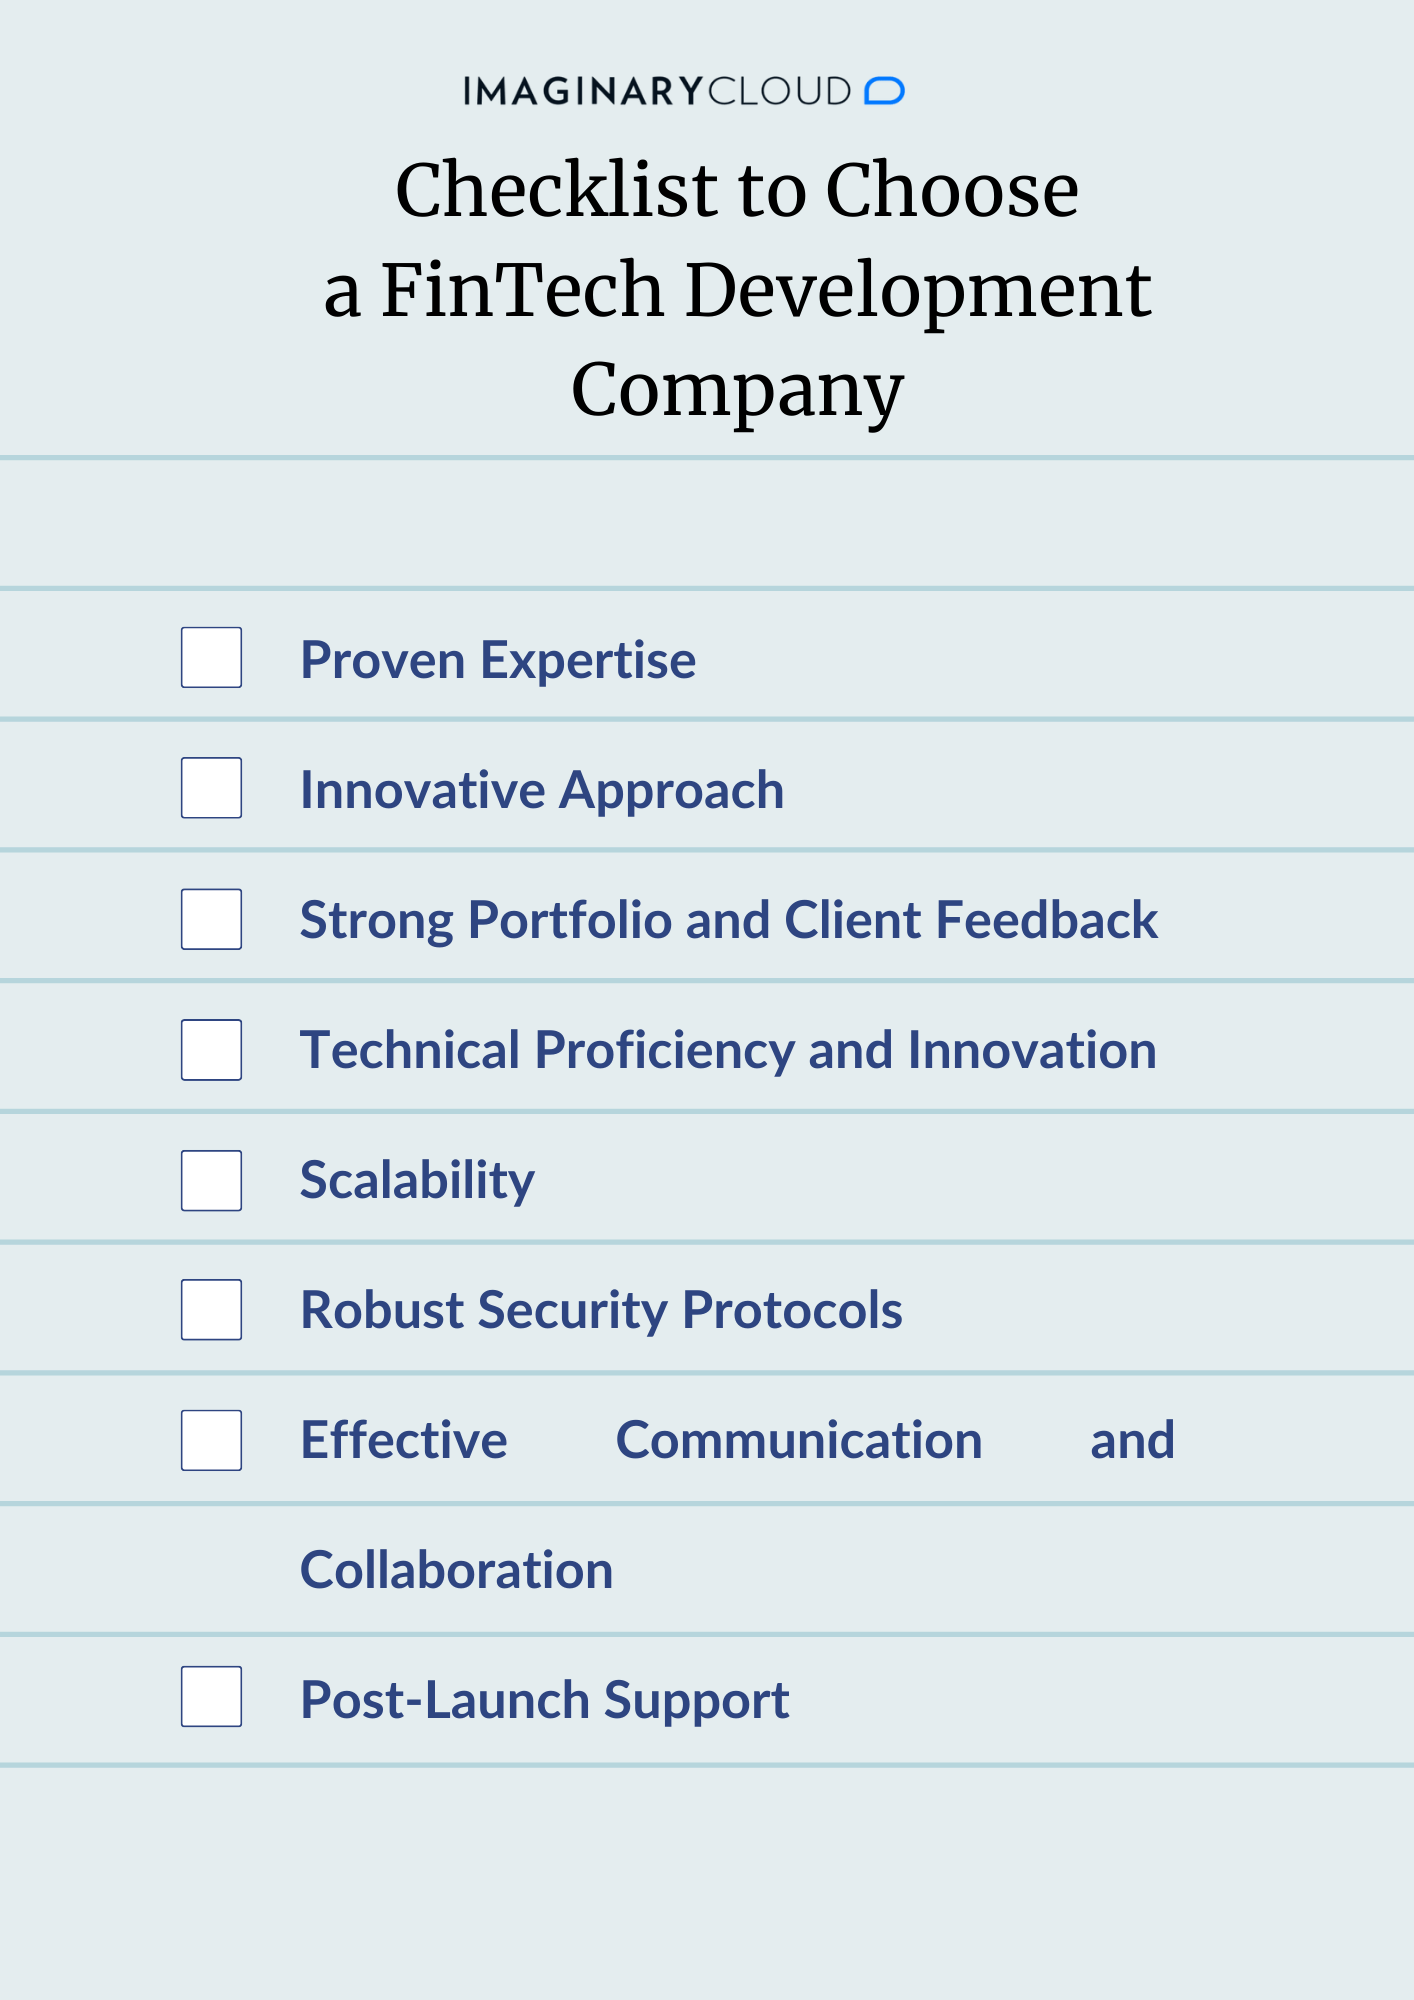 Checklist to Choose a FinTech Development Company